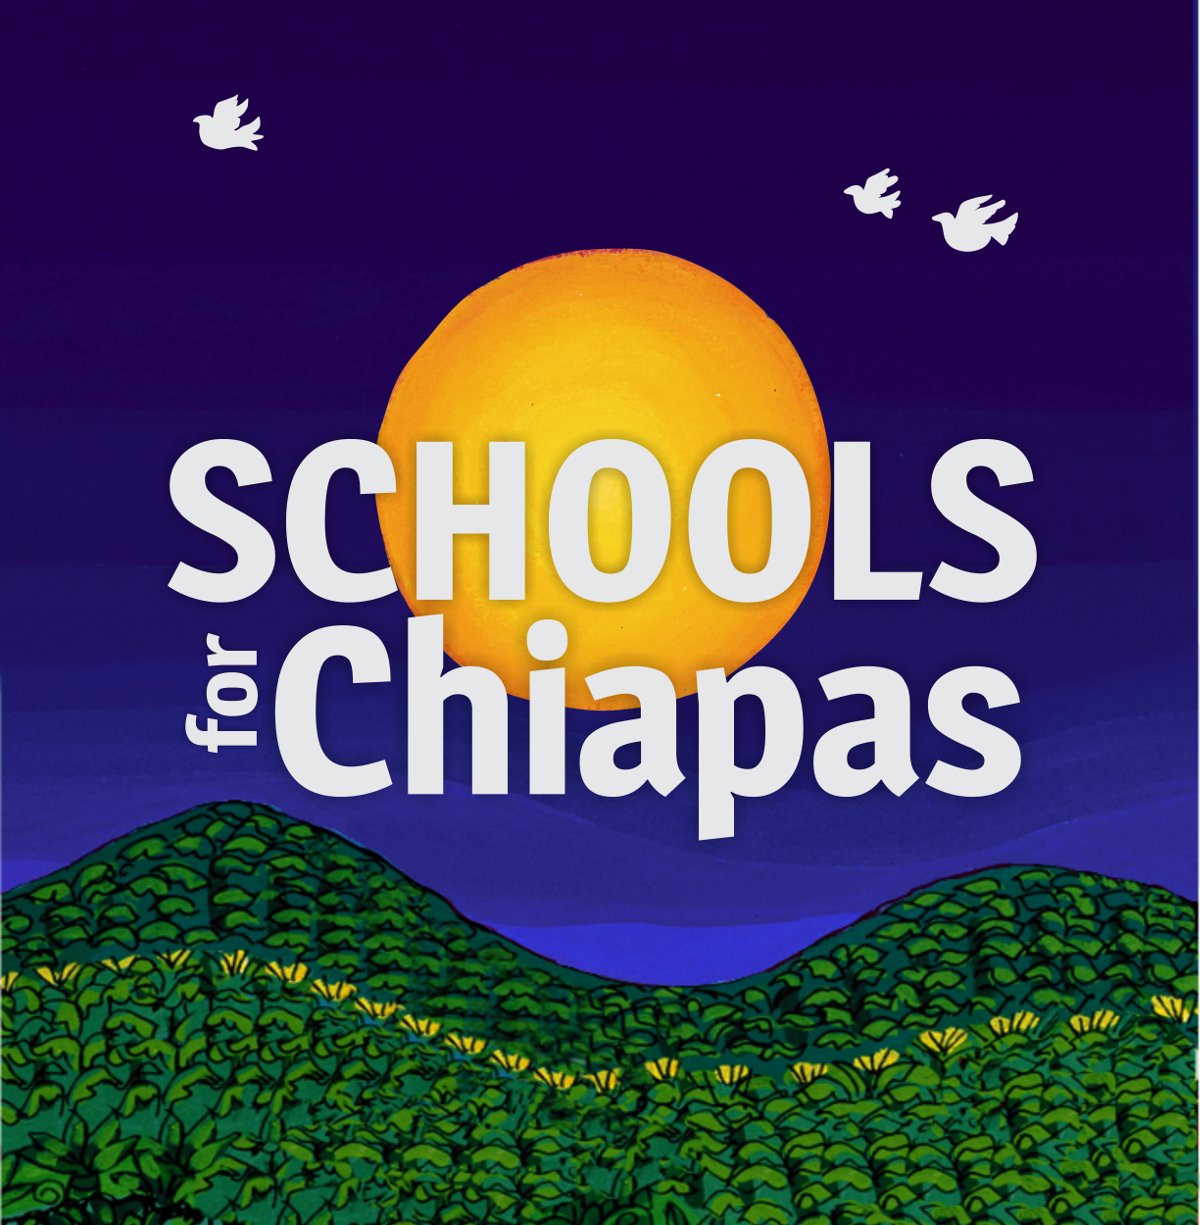 (c) Schoolsforchiapas.org